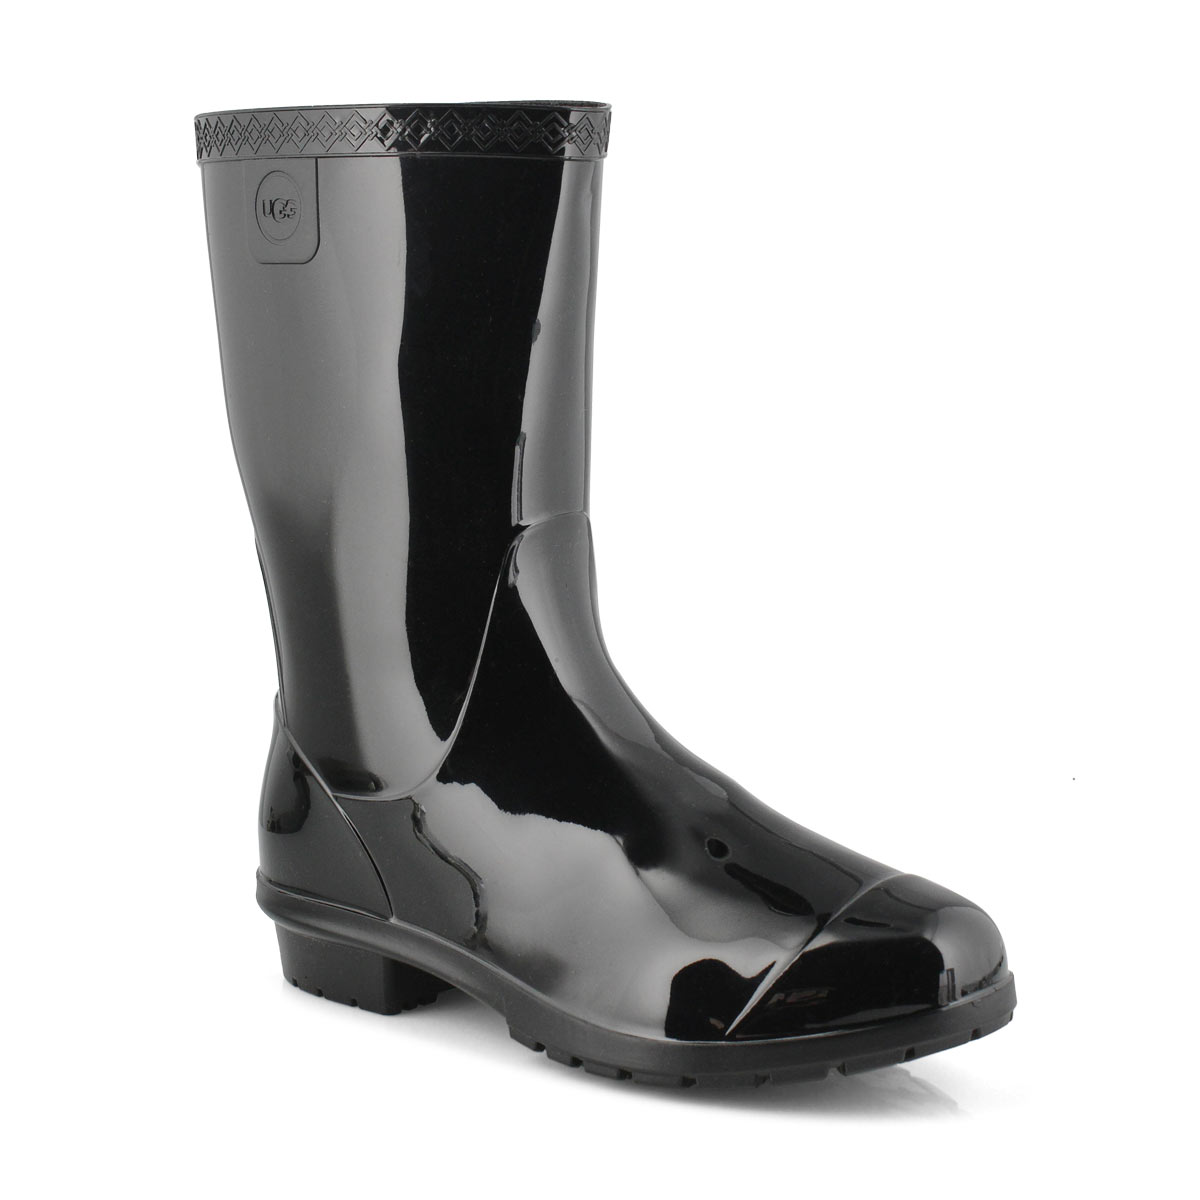 waterproof rain boots | Softmoc 